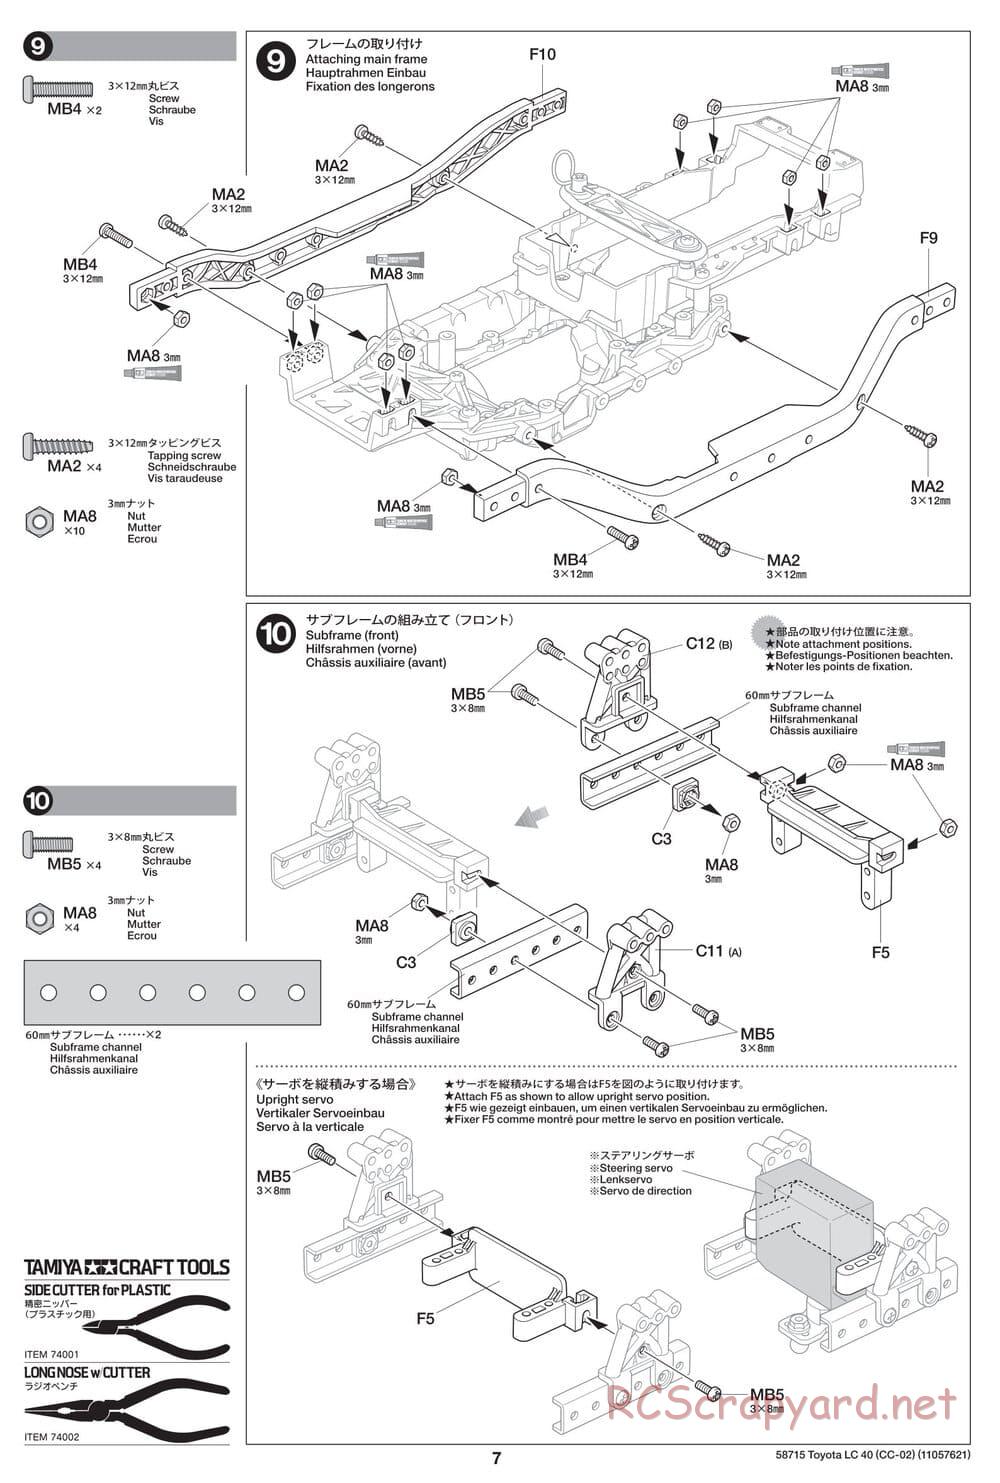 Tamiya - Toyota Land Cruiser 40 - CC-02 Chassis - Manual - Page 7